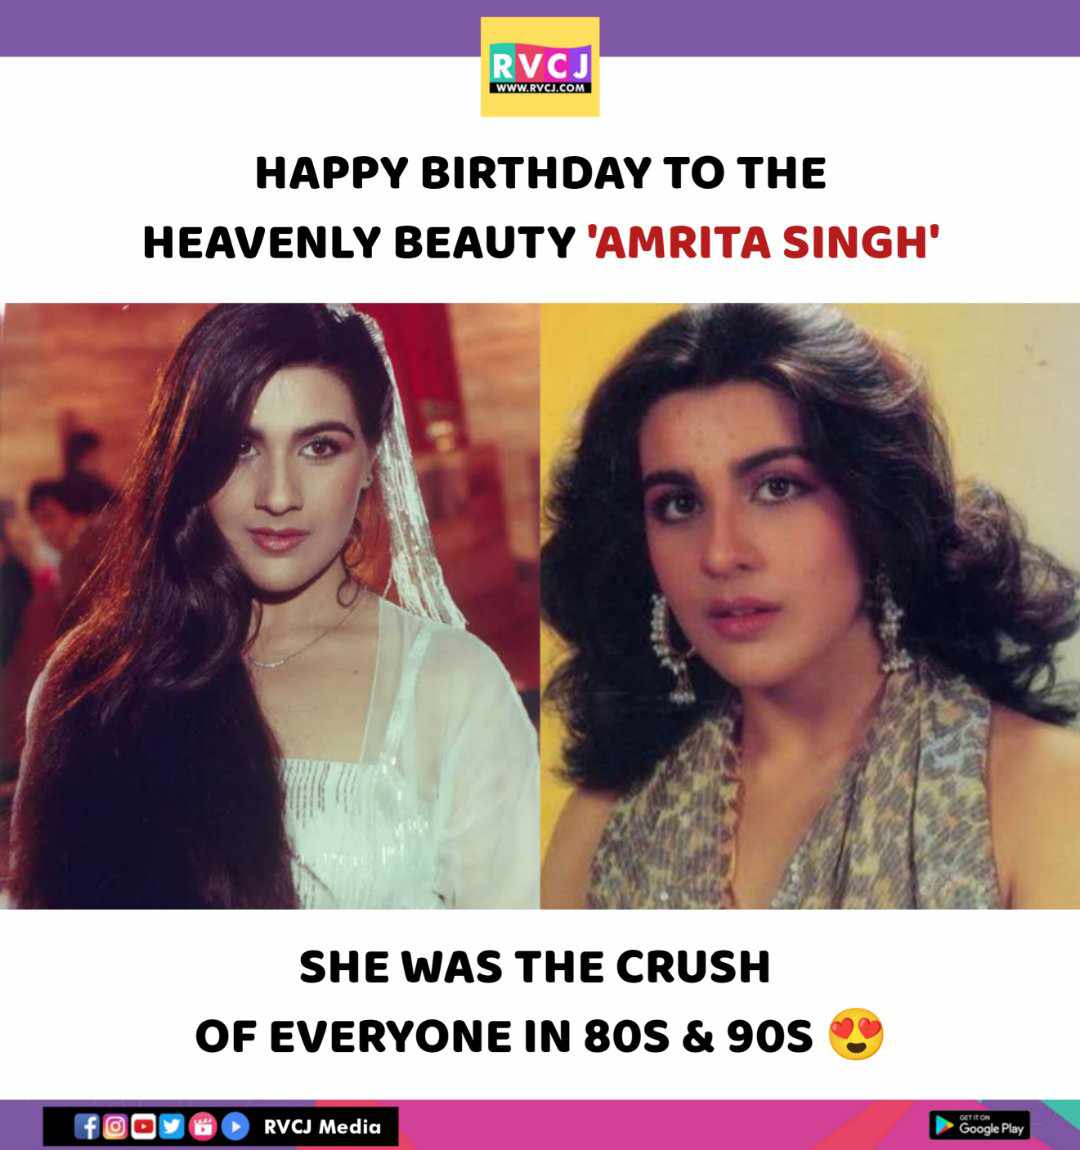 Happy Birthday Amrita Singh

#amritasingh